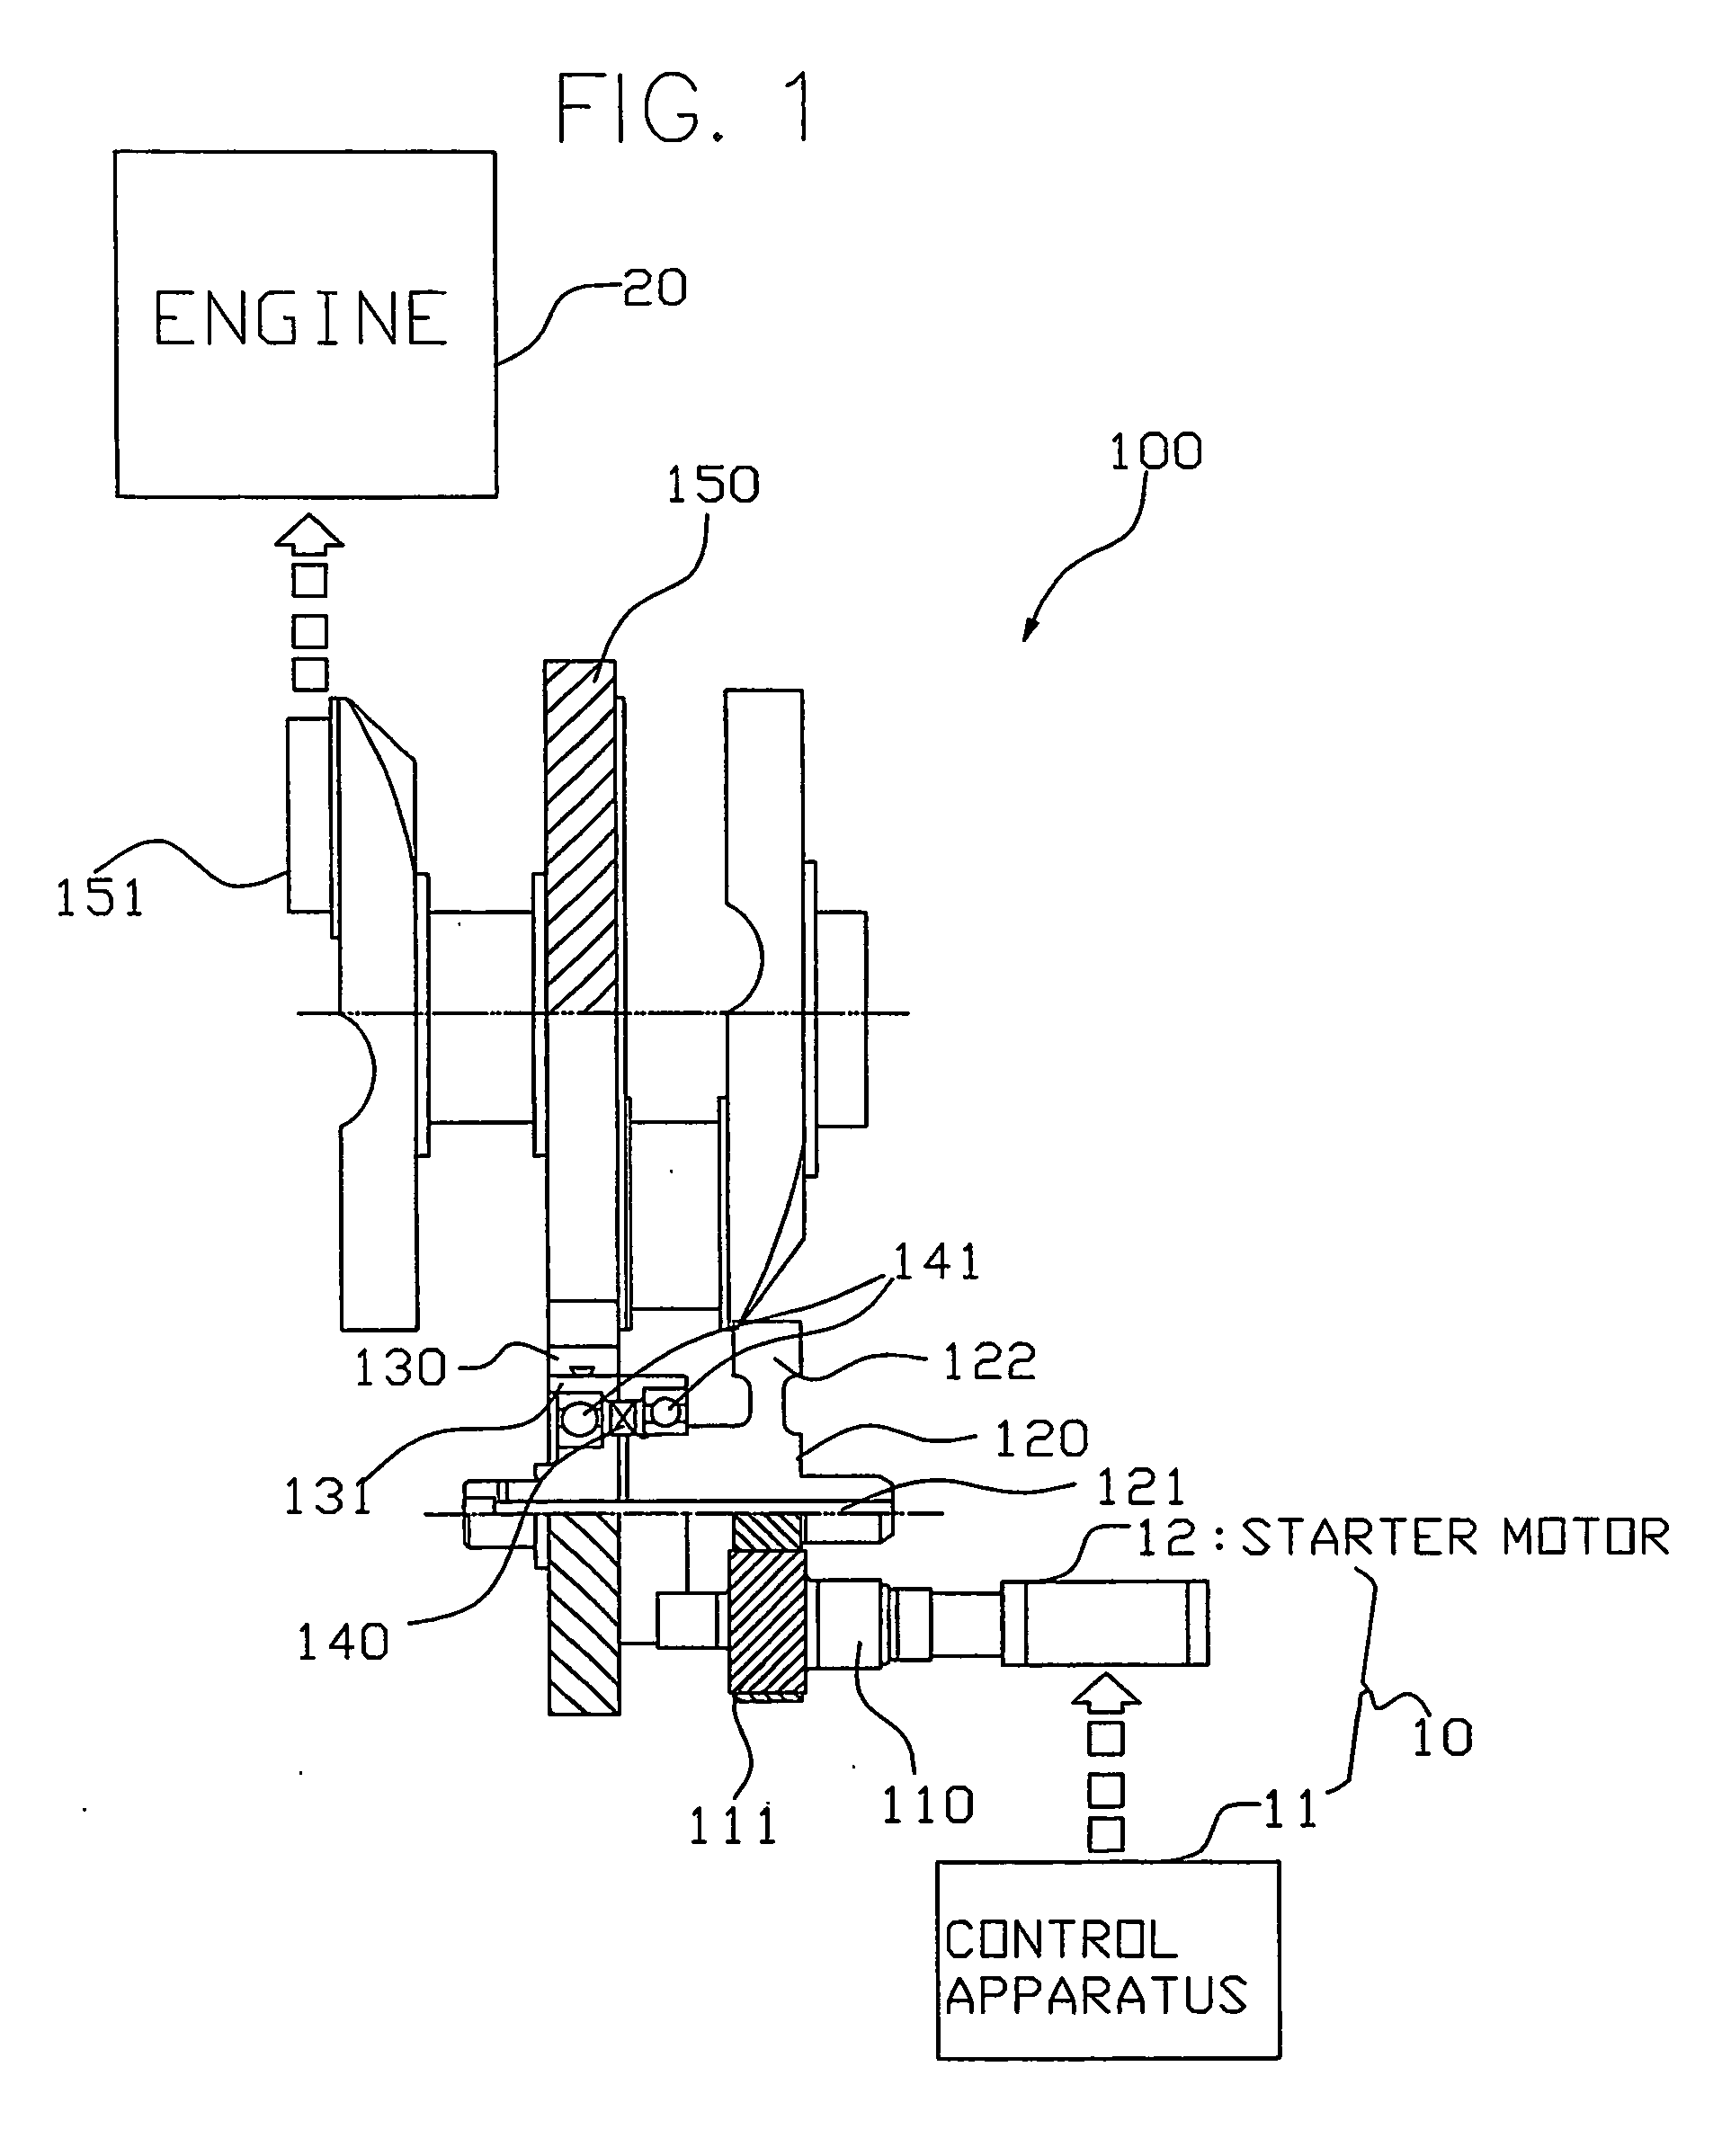 Engine starting apparatus and method